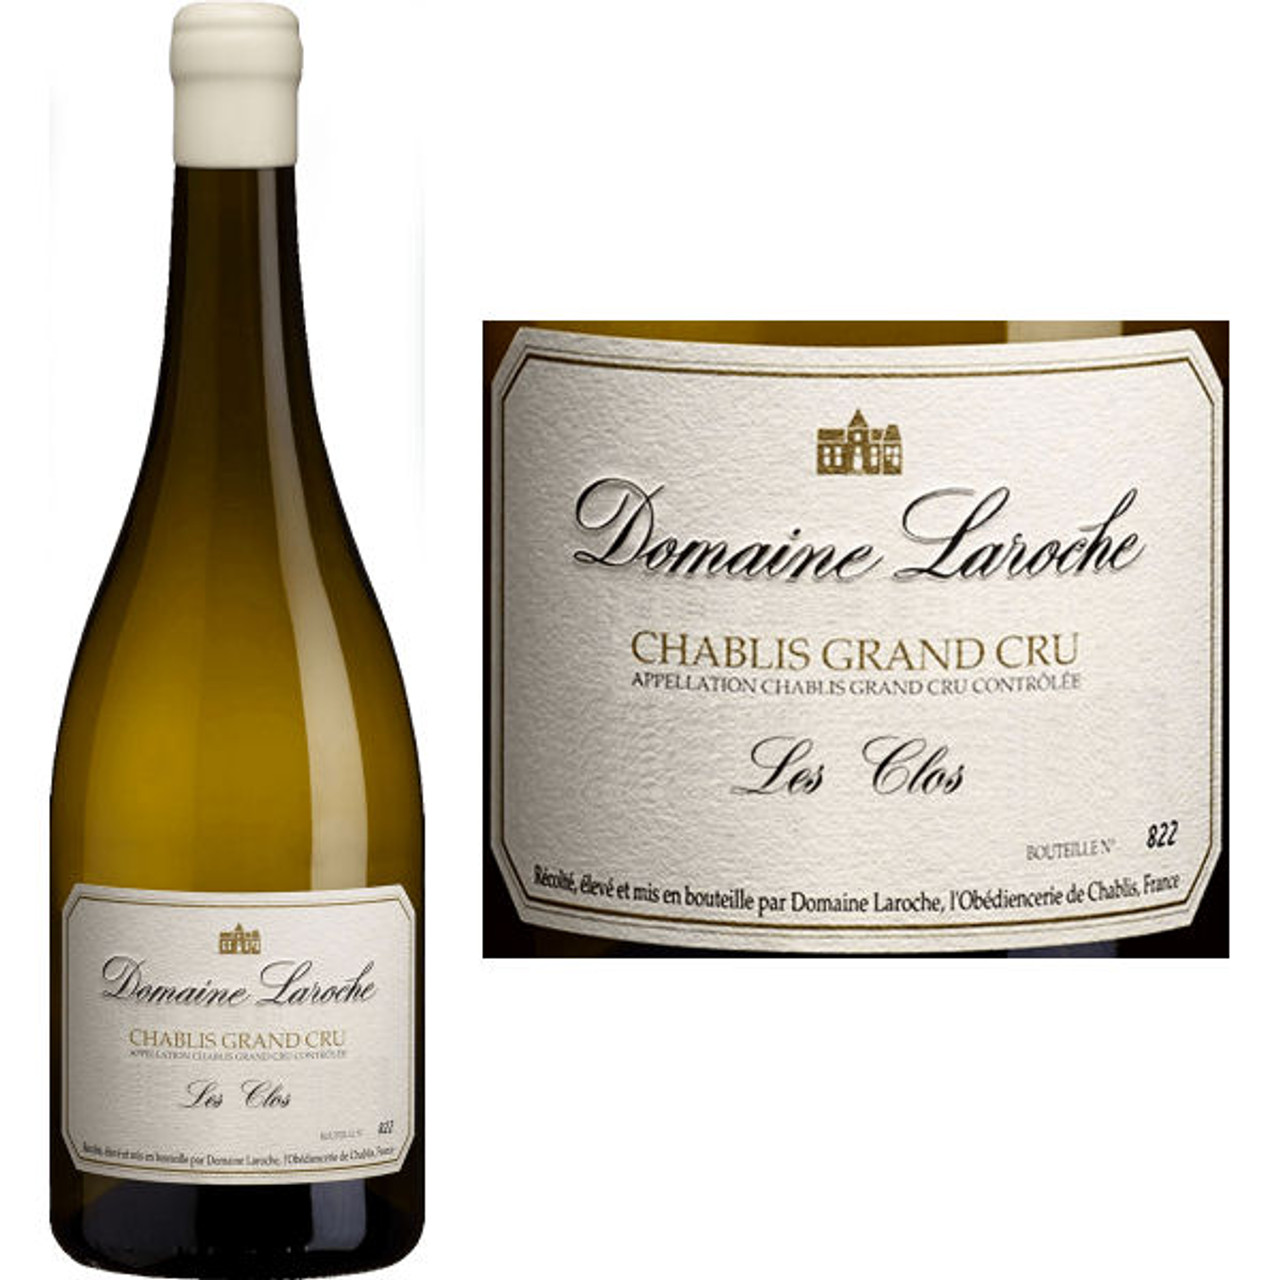 Domaine Laroche Chablis Grand Cru Les Clos Chardonnay